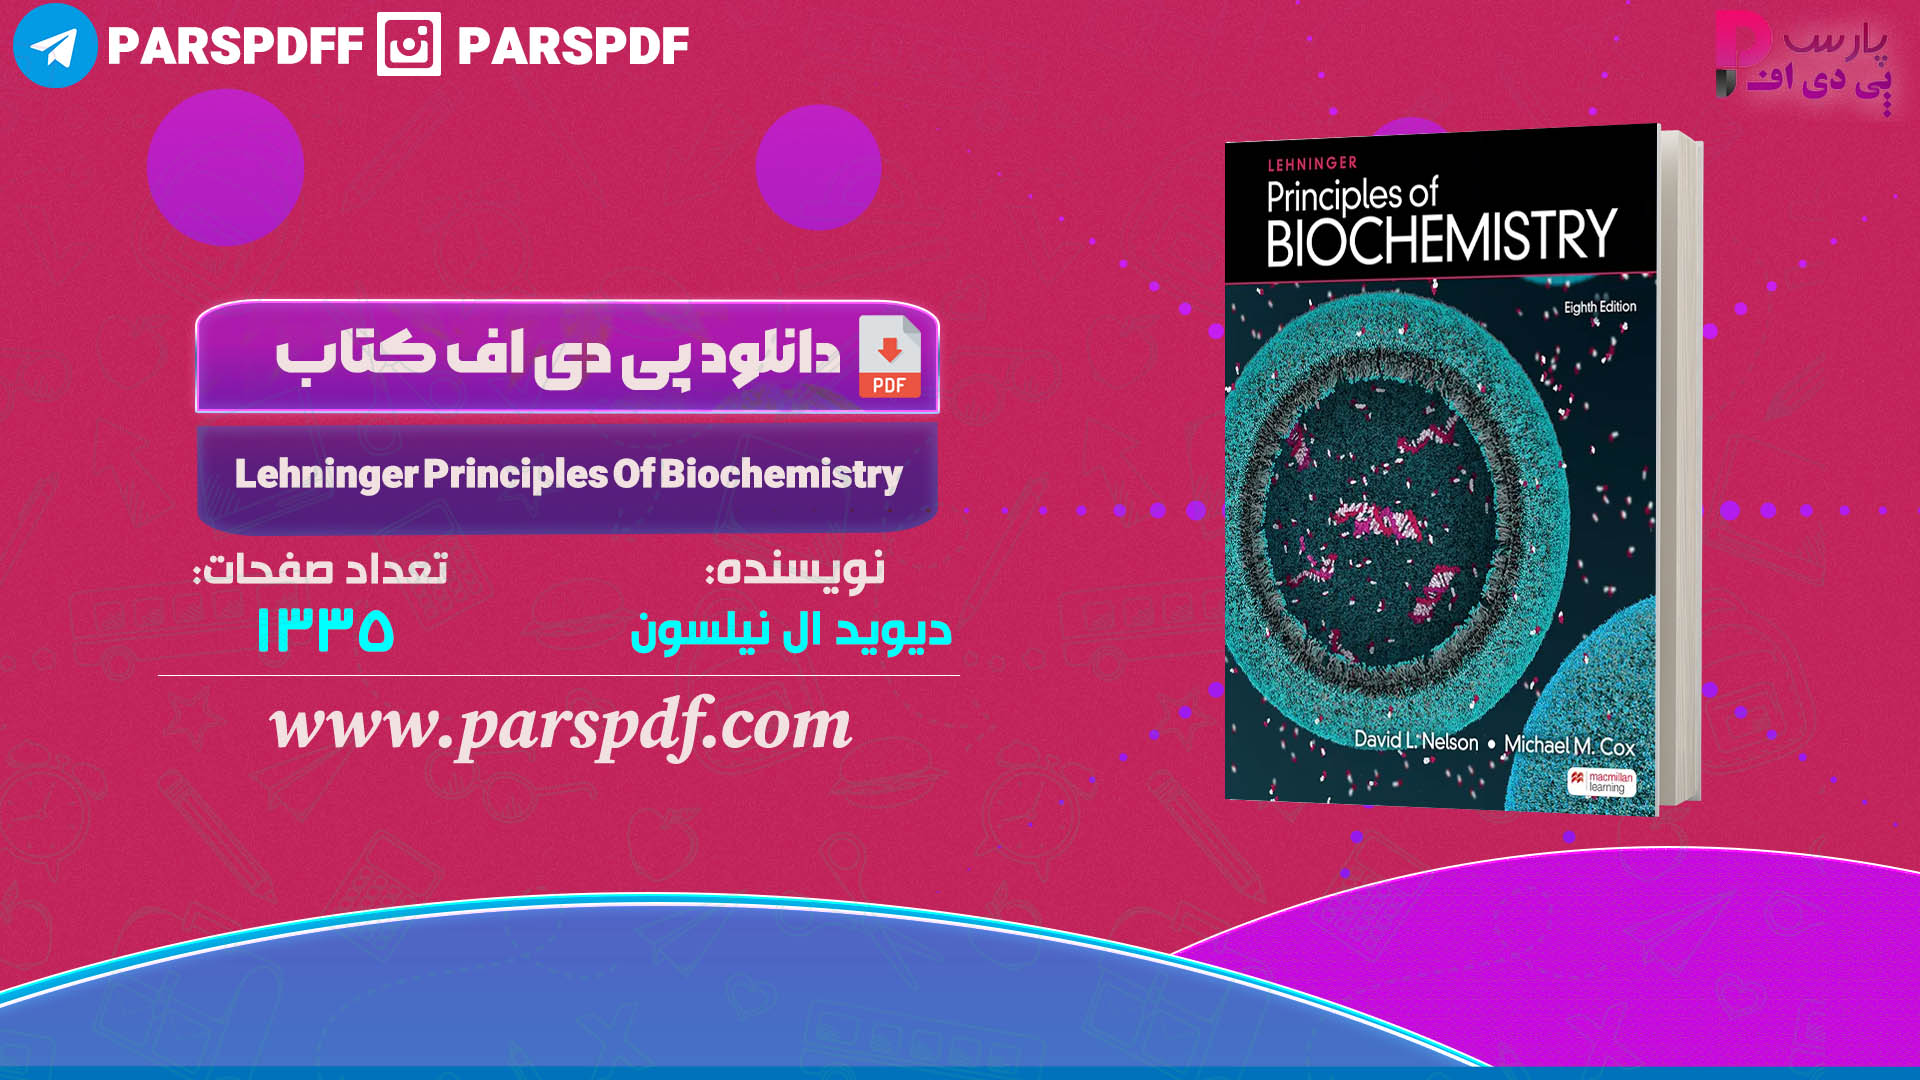 کتاب Lehninger Principles Of Biochemistry دیوید ال نیلسون